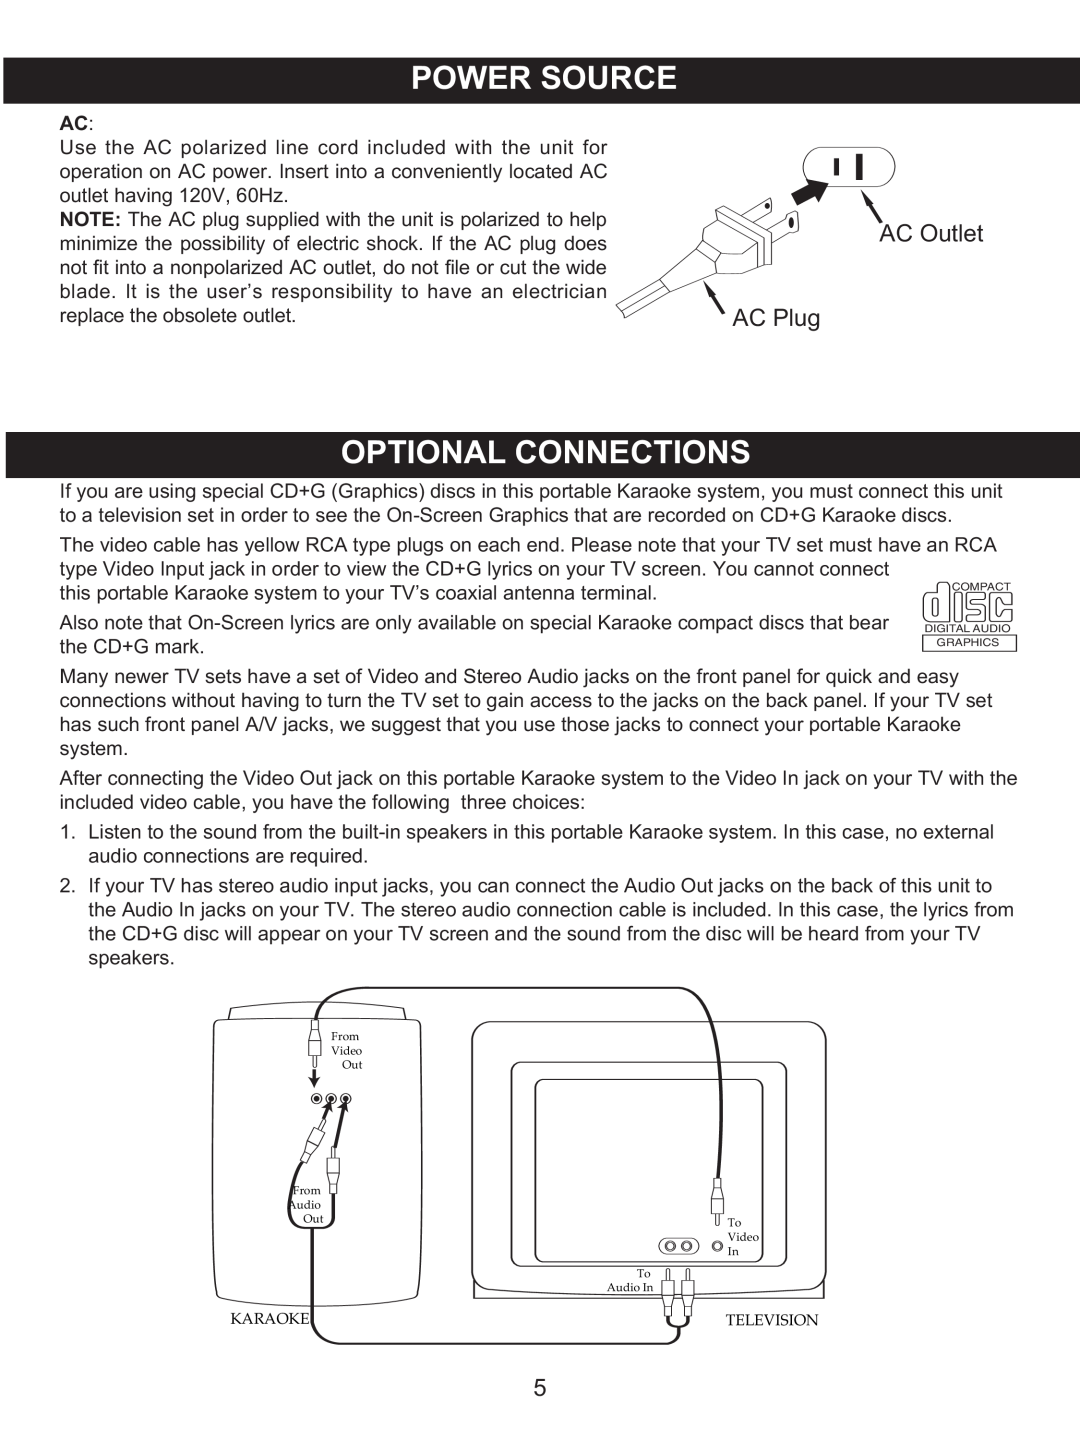 Memorex MKS2422 manual AC Outlet, AC Plug 